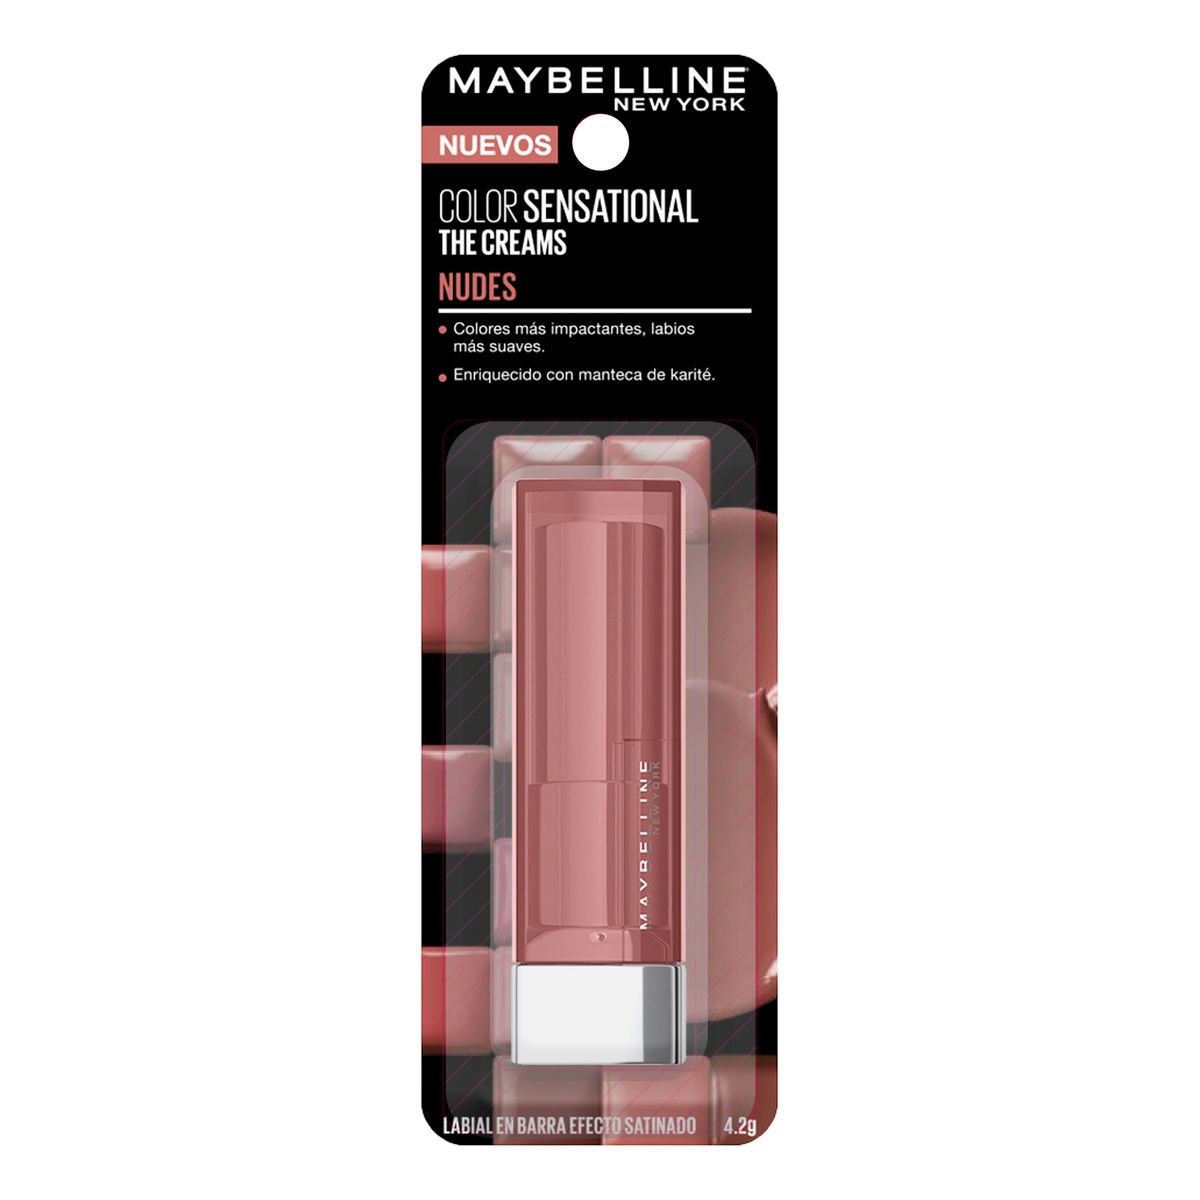 The Maybelline Brick York New Sensational Labial Beat Creams Color